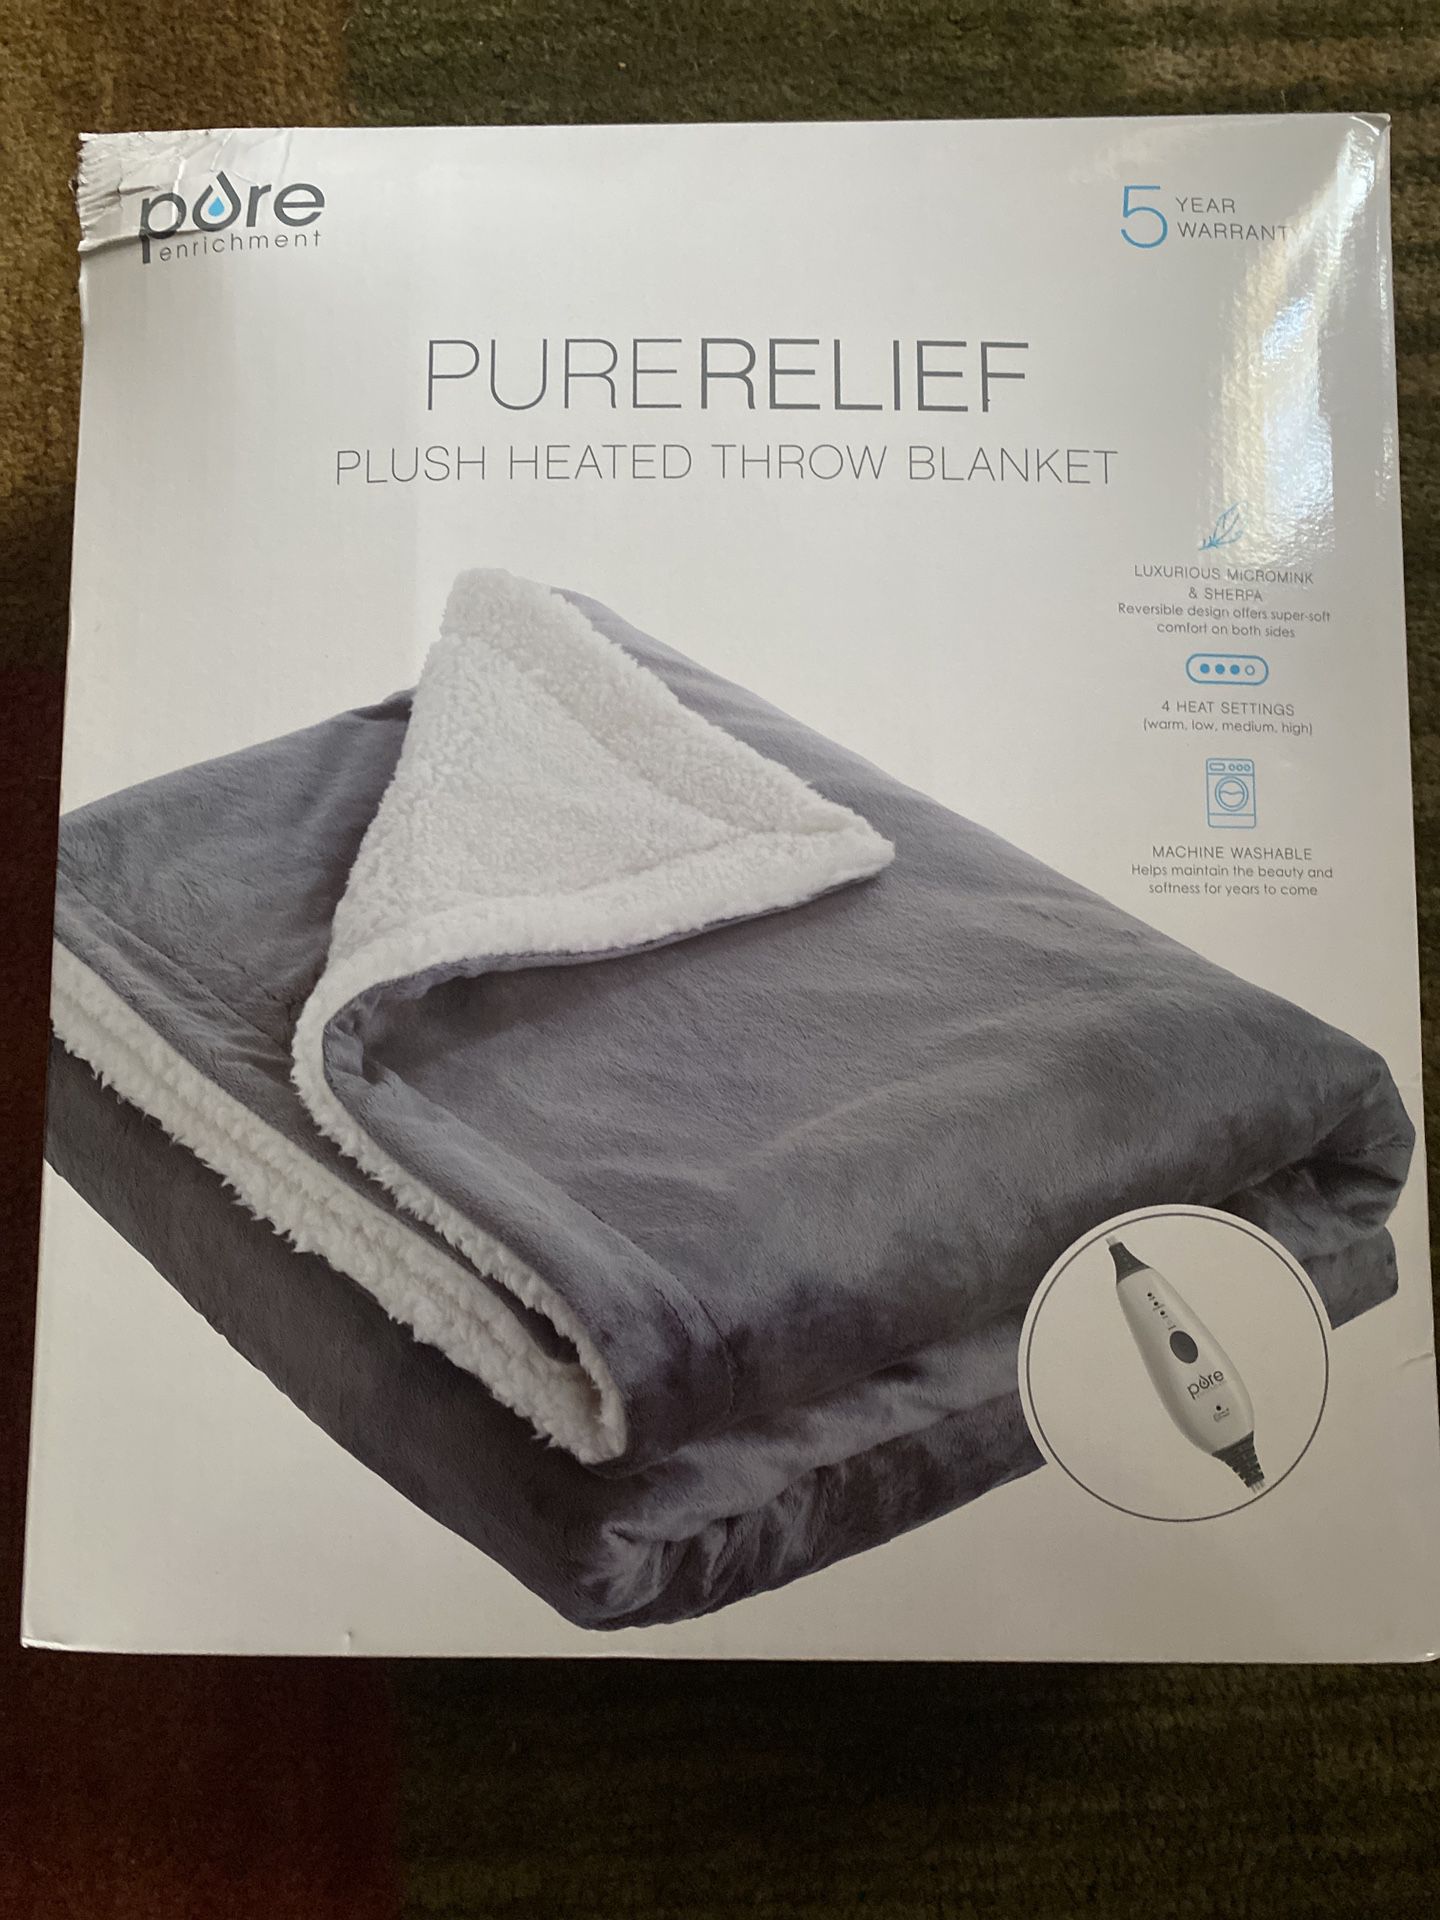 Pure Enrichment PureRelief Plush Heated Throw Blanket